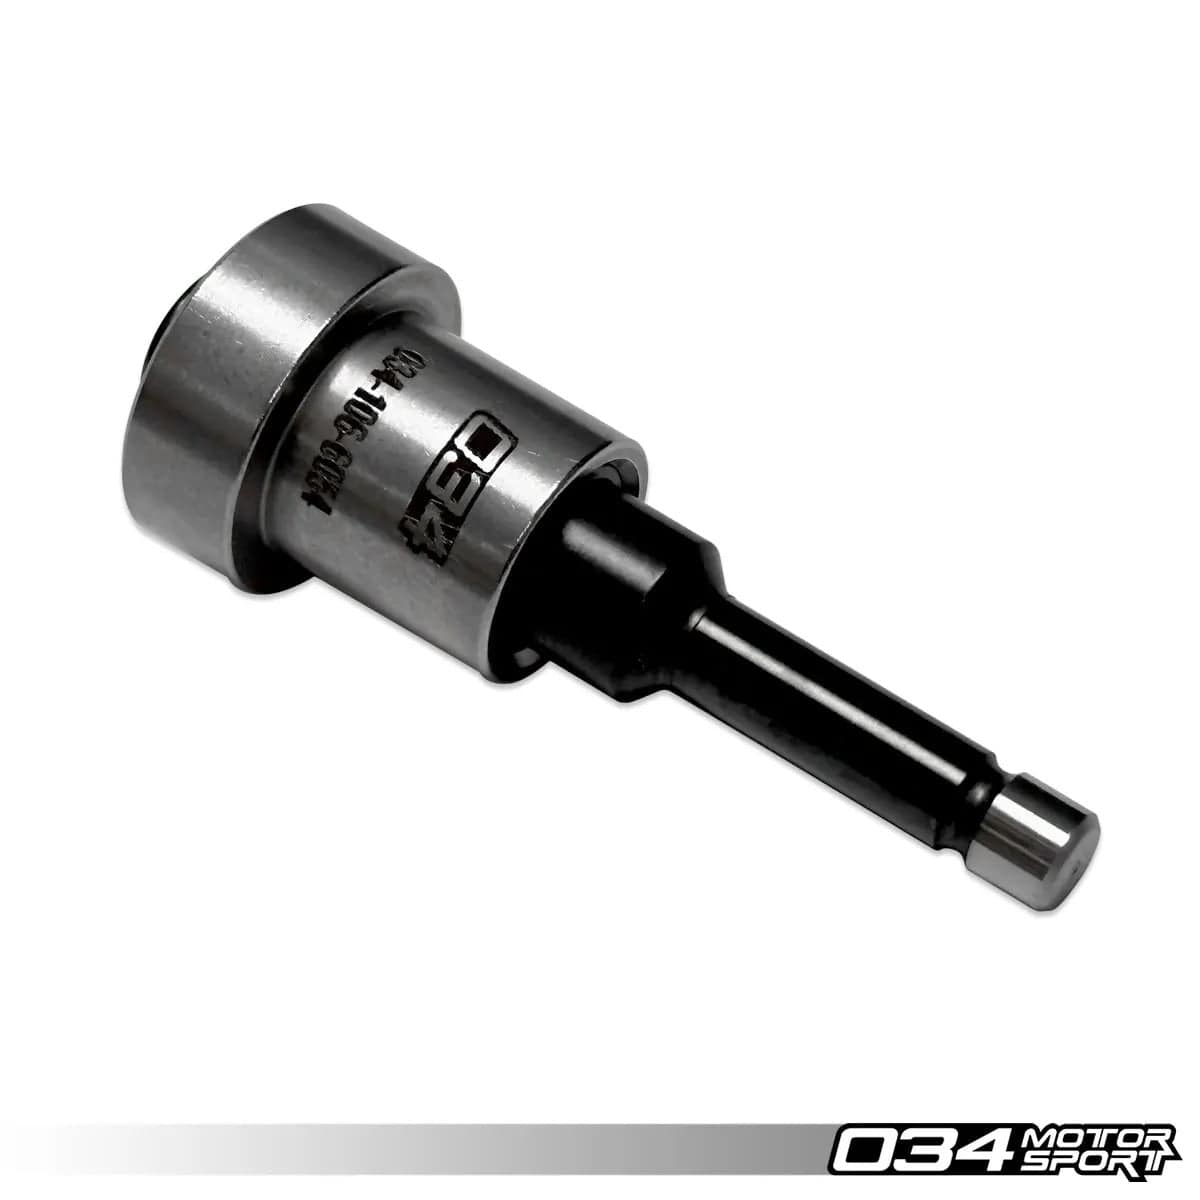 034 Motorsport High Pressure Fuel Pump Piston Upgrade Kit - Audi / Porsche / 2.9T / 3.0T TFSI (EA839)